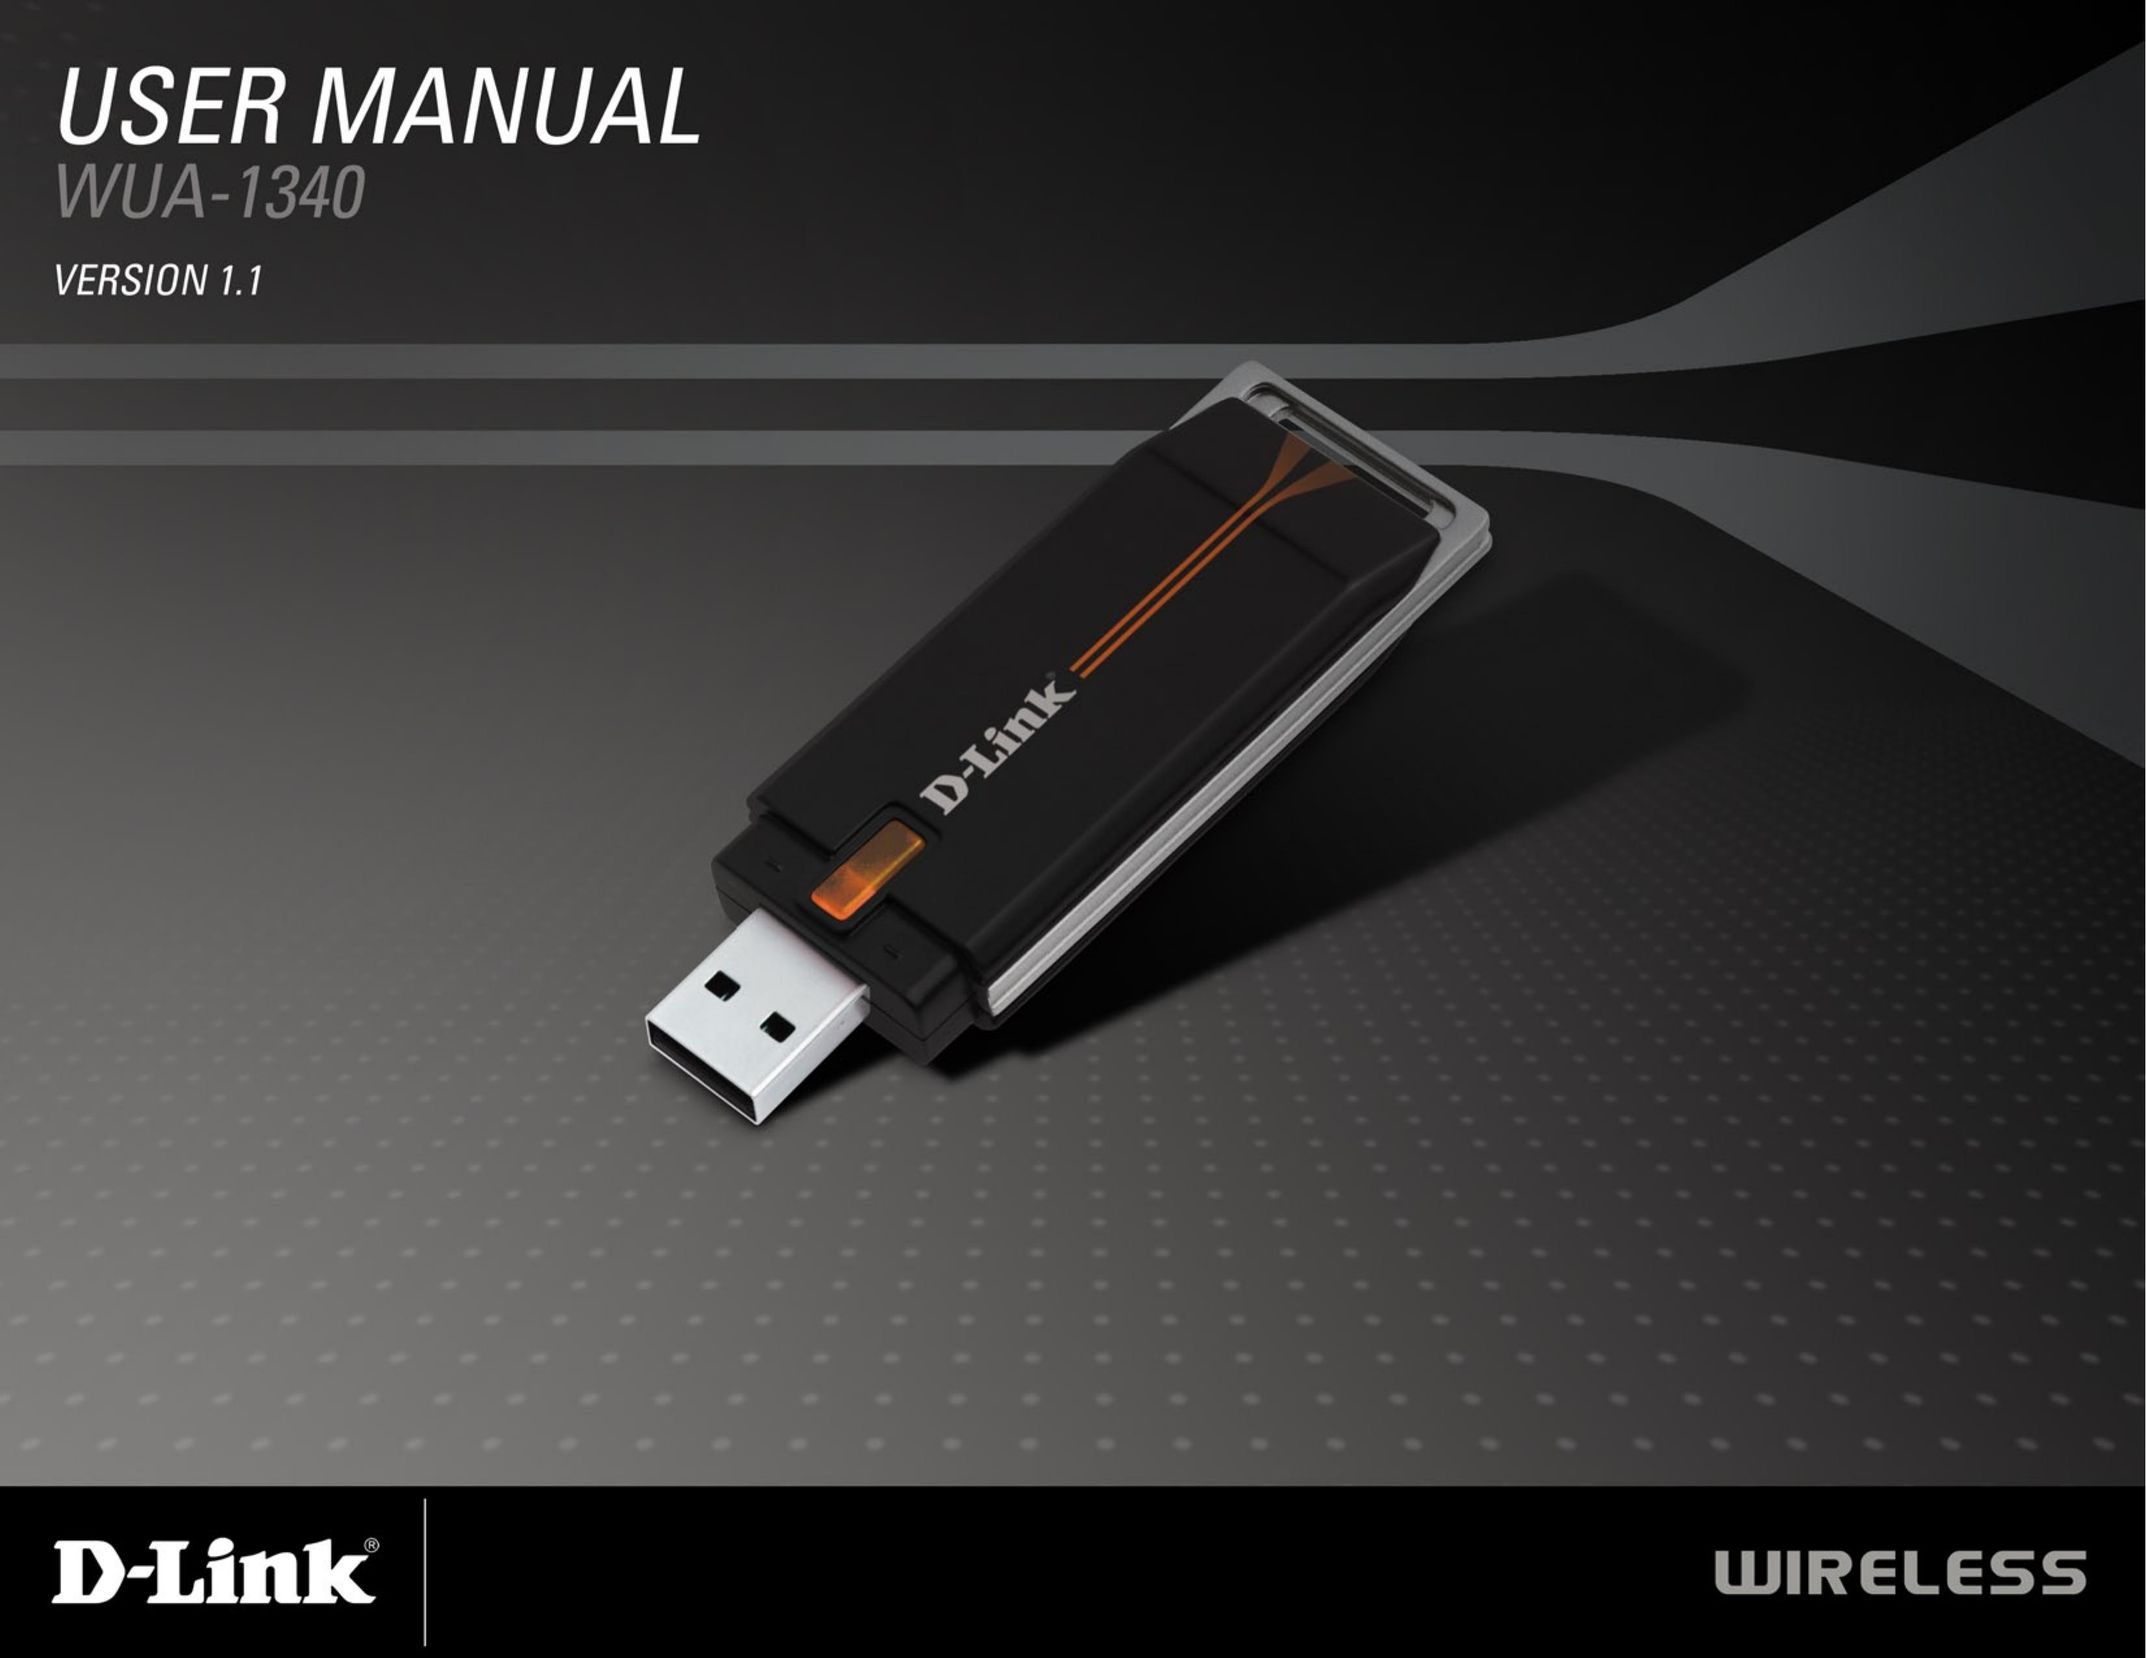 D-Link d-link wireless Network Card User Manual